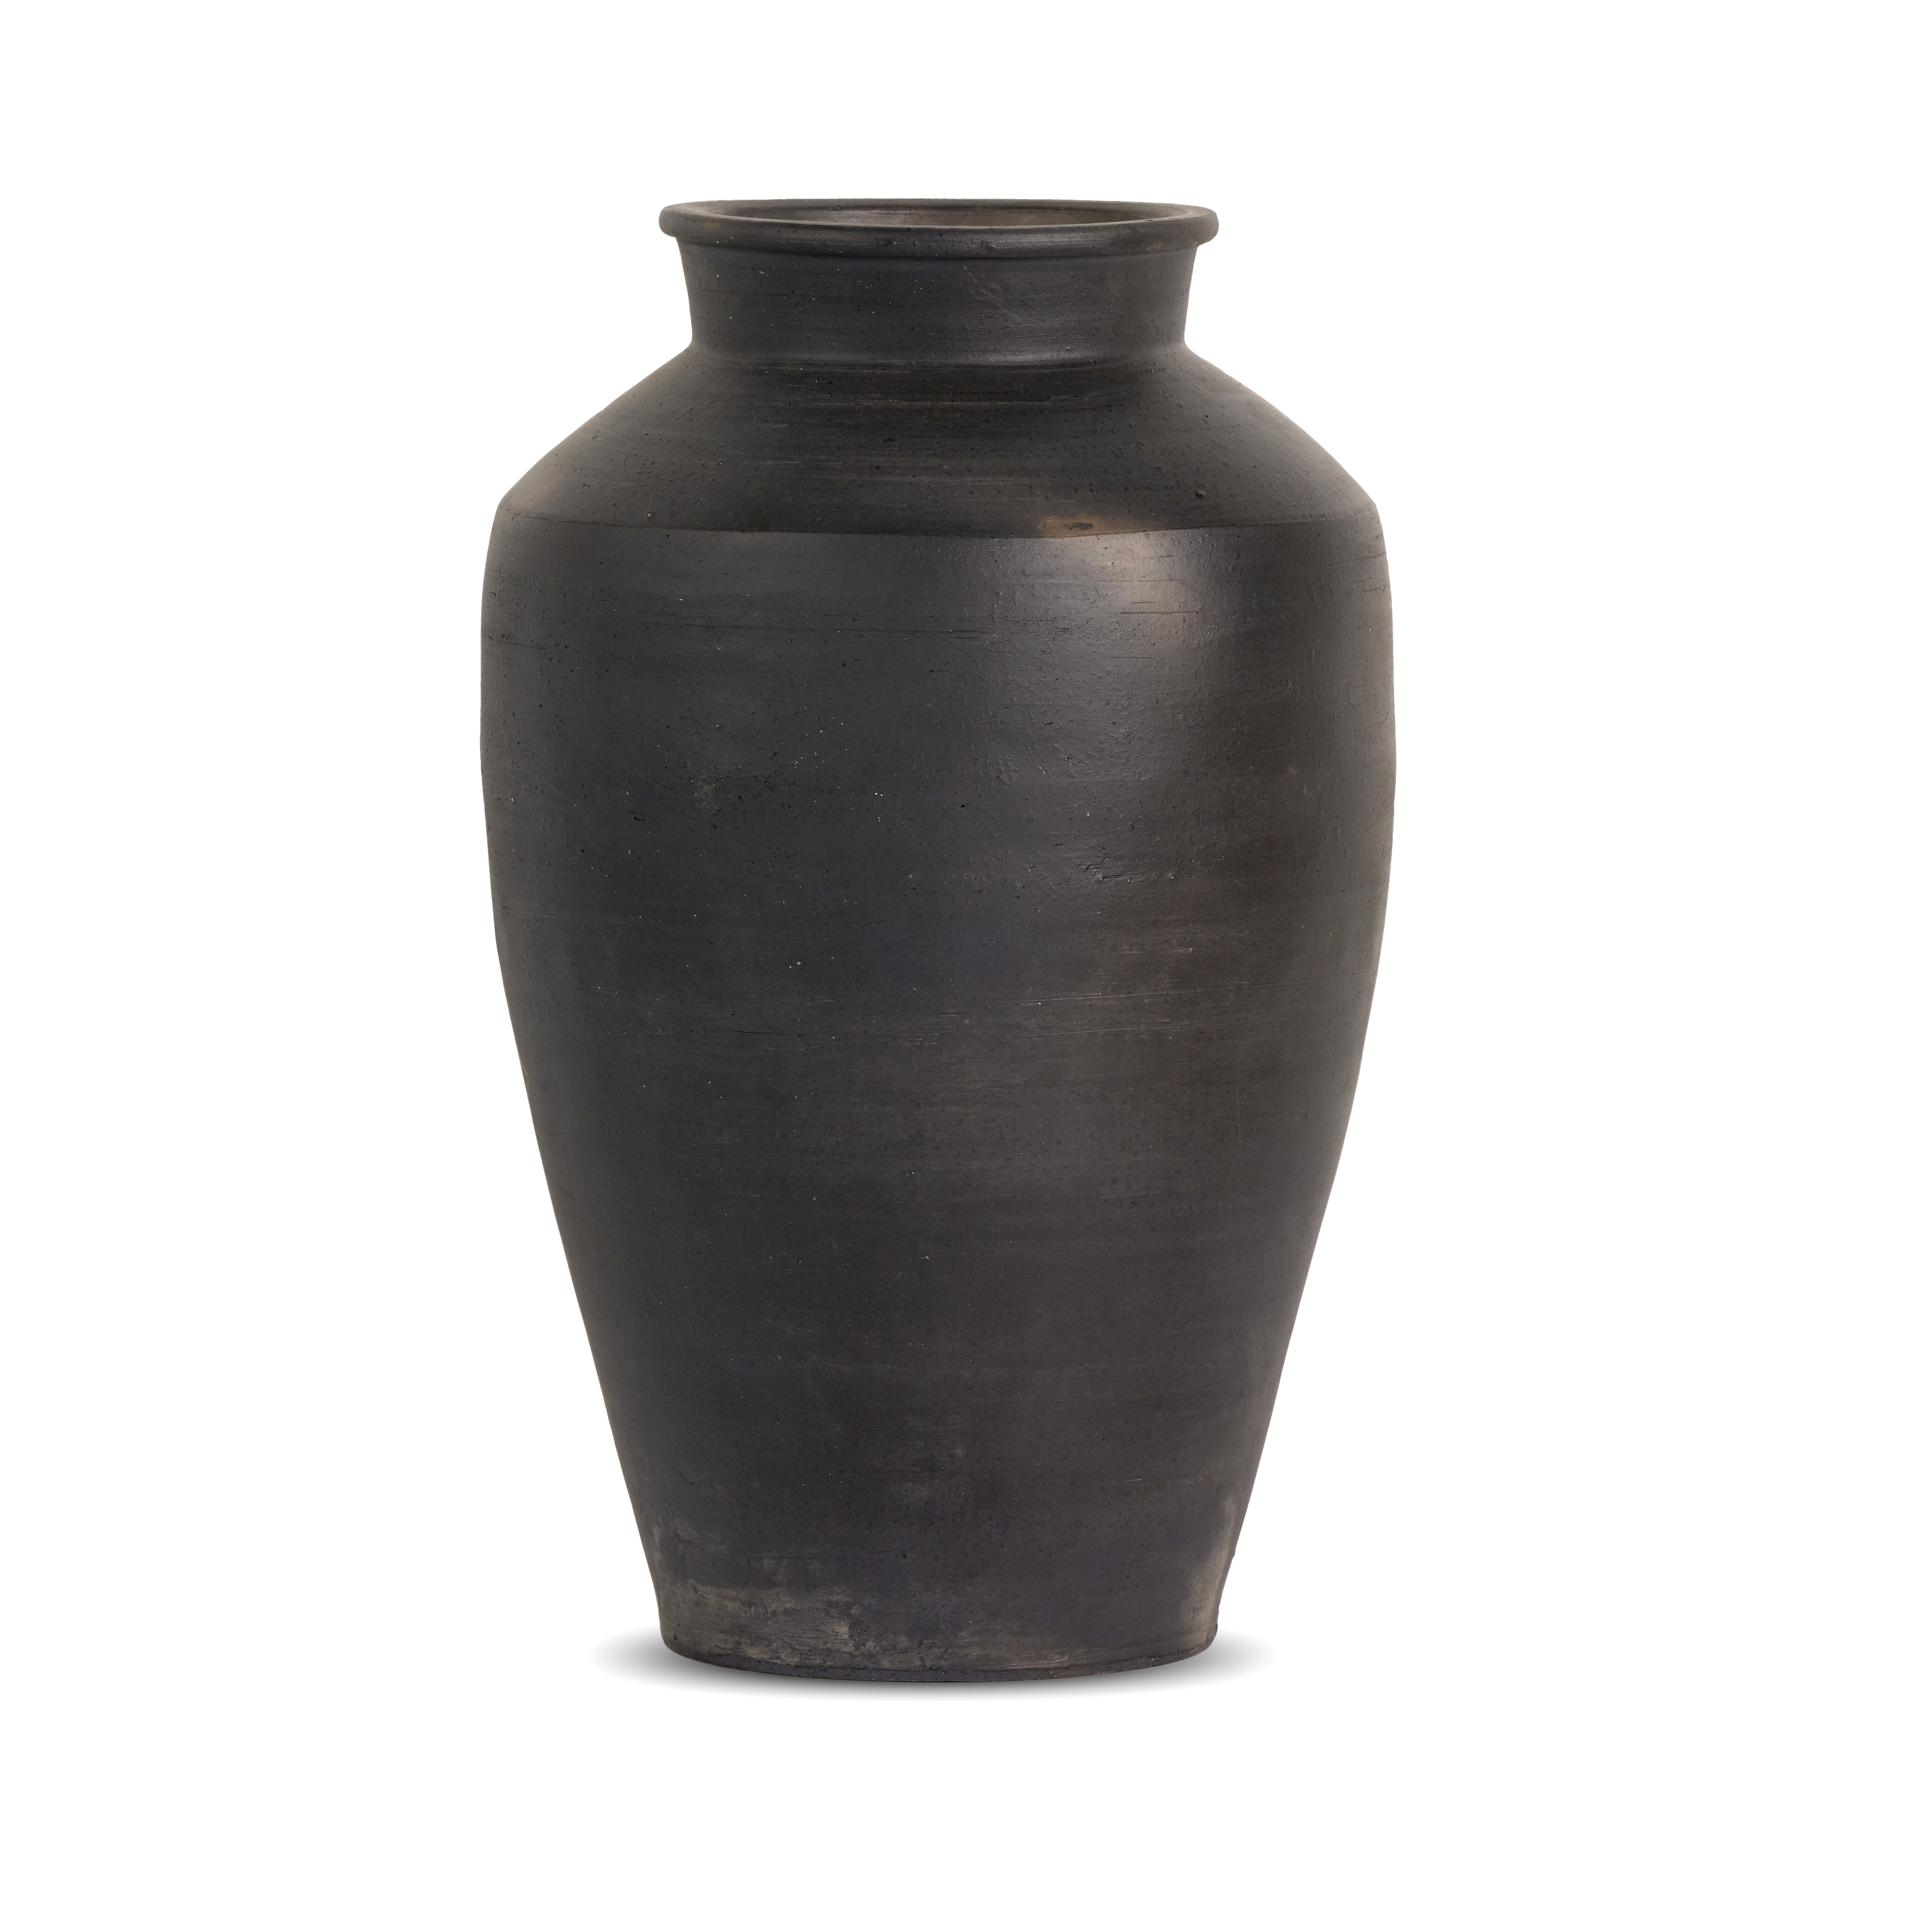 Kyland Vase-Aged Black Ceramic - Image 0